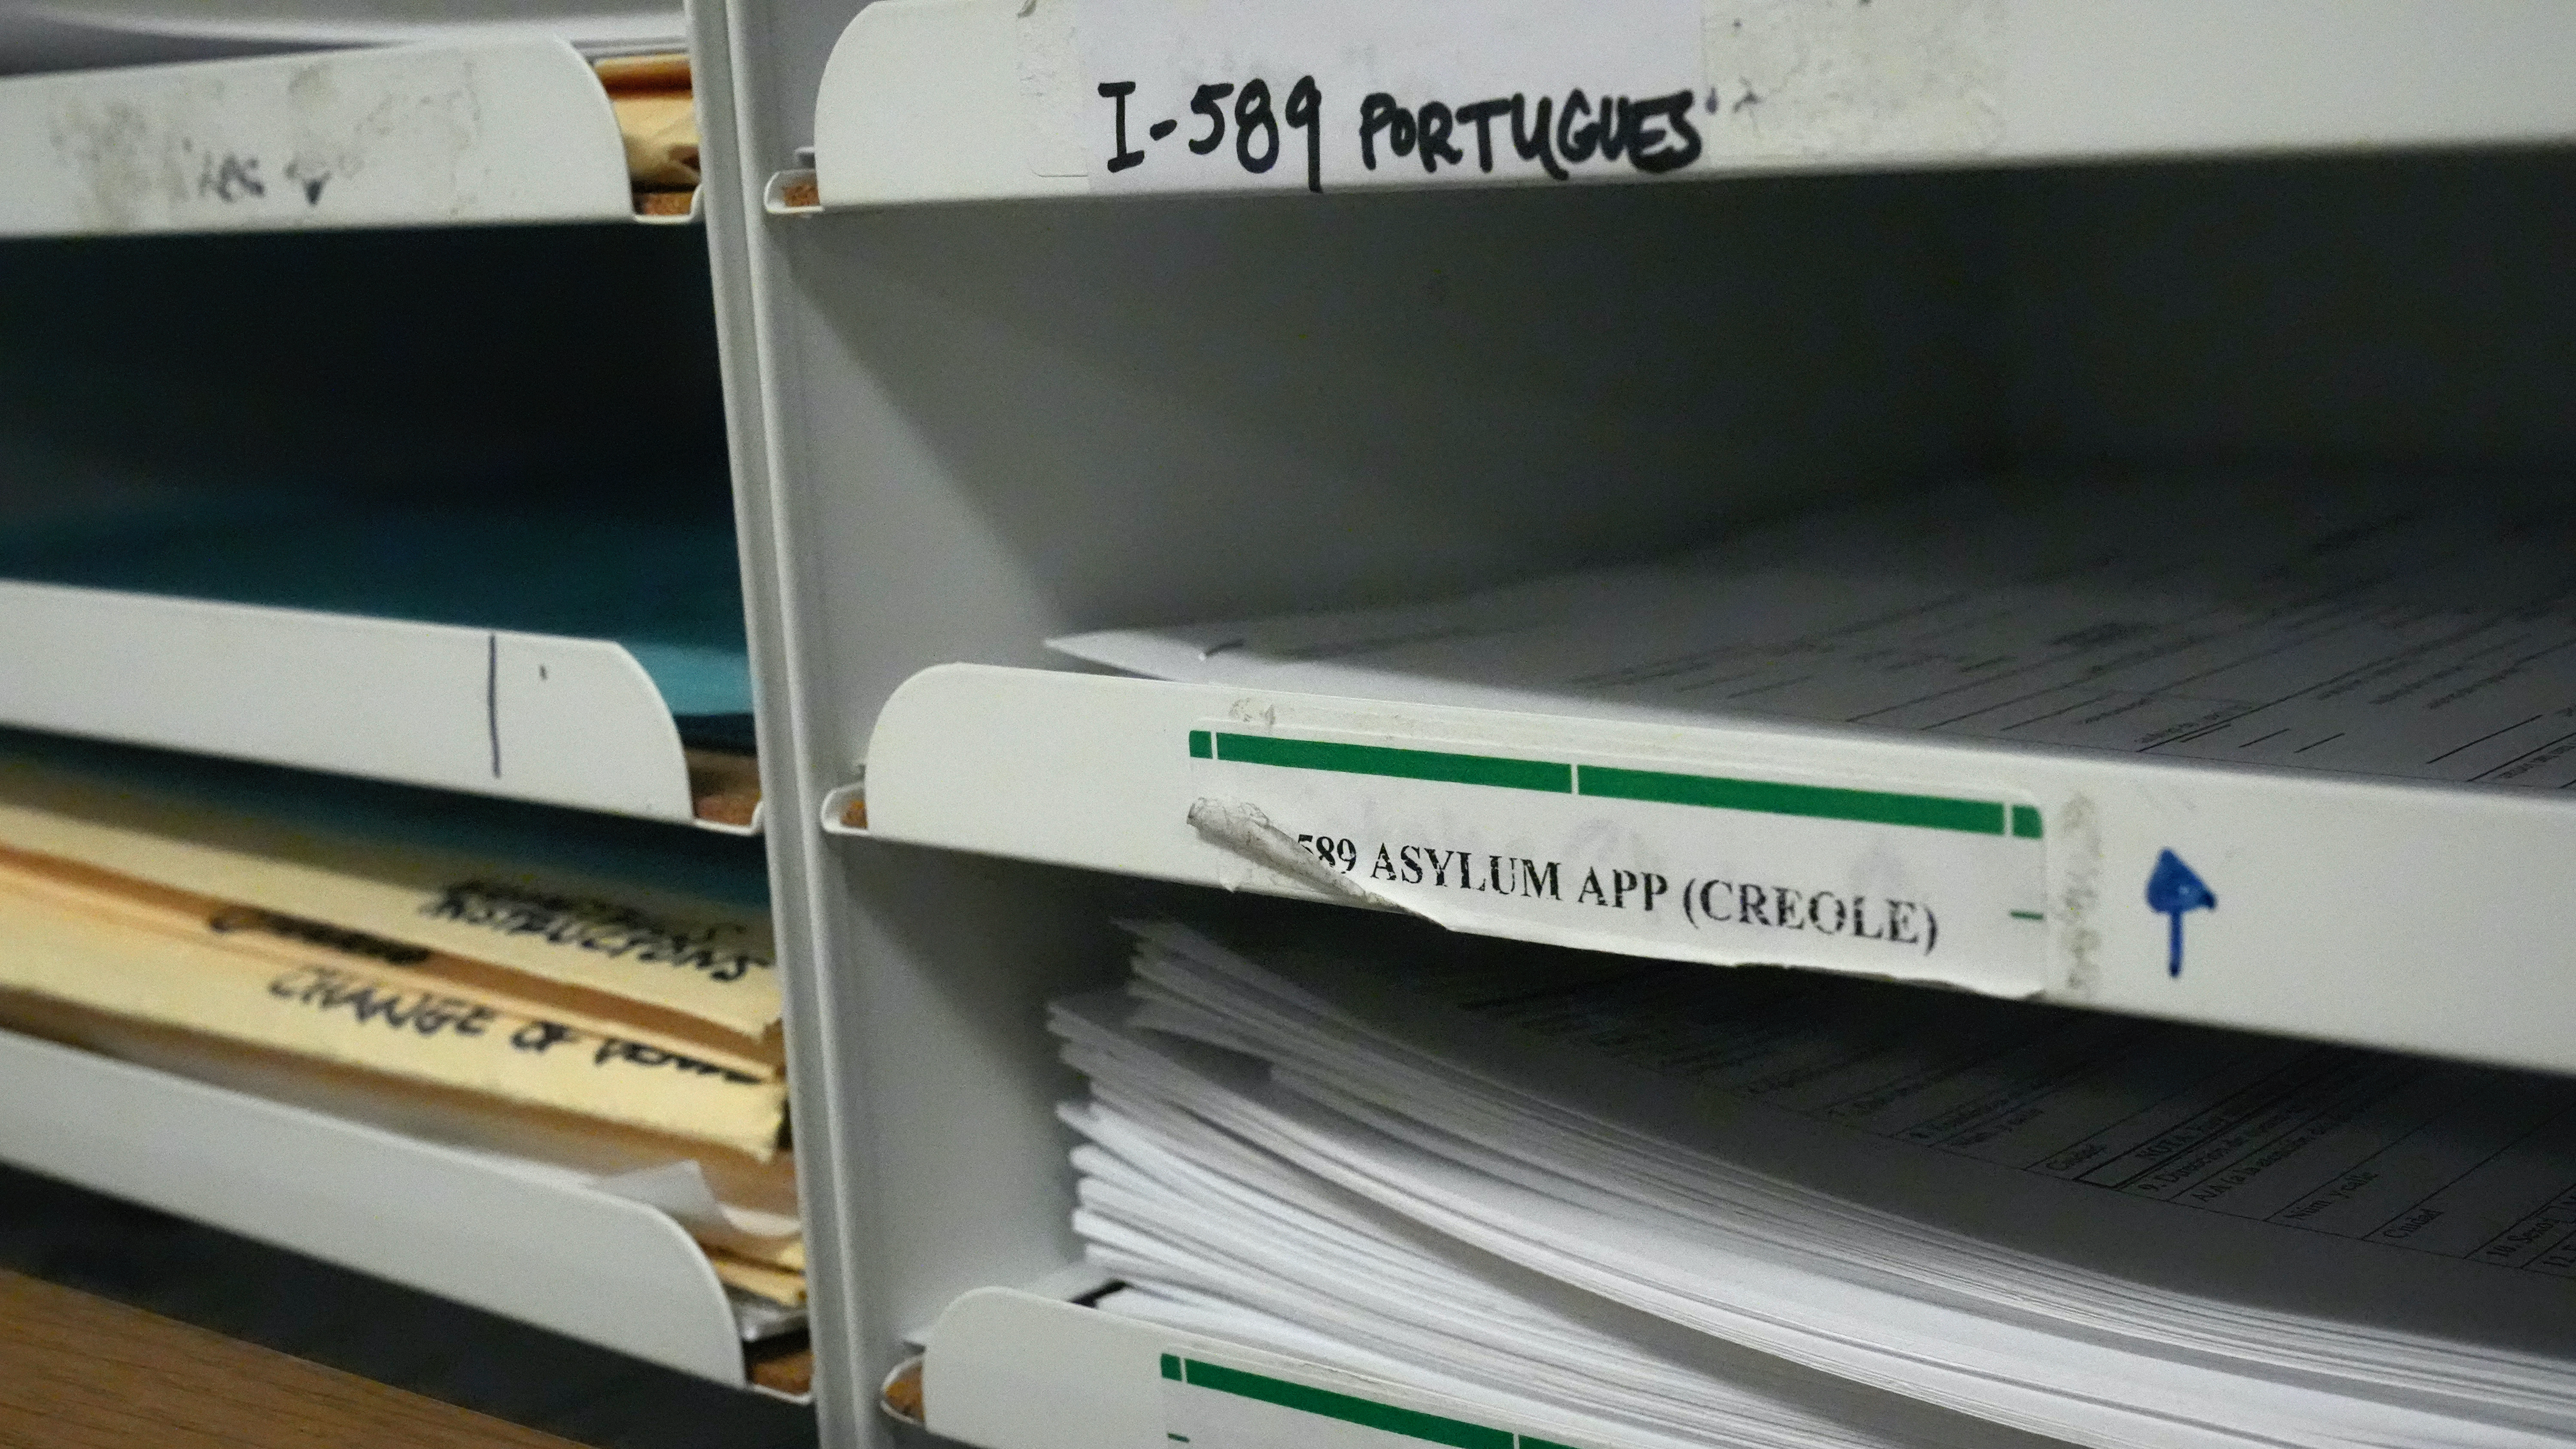 shelves with folders